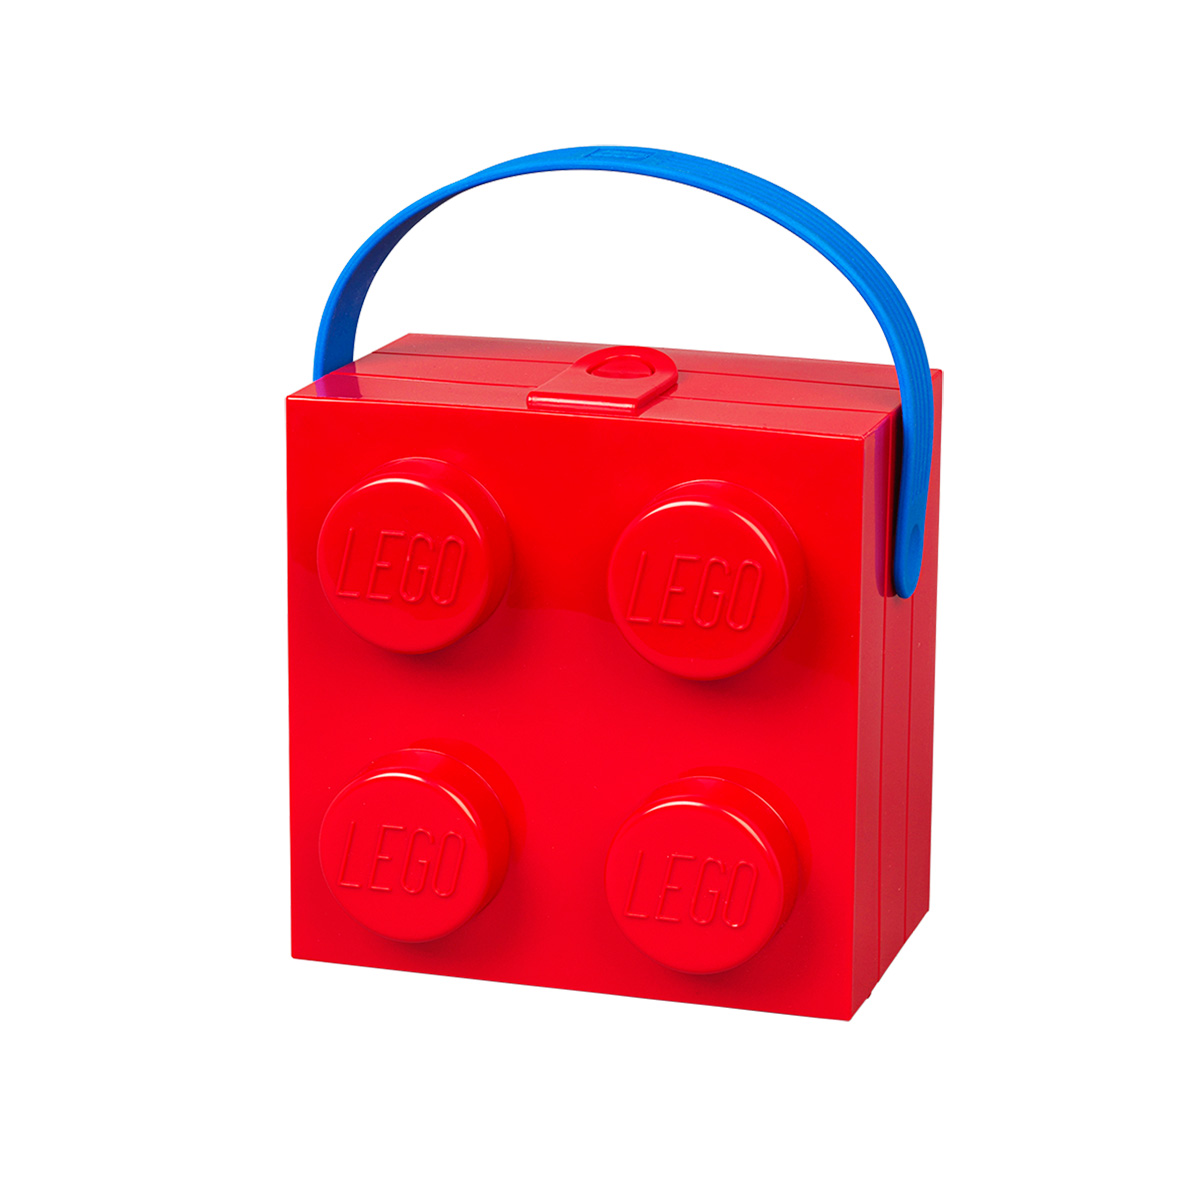 Lego Ninjago Sorting Box Transparent Red